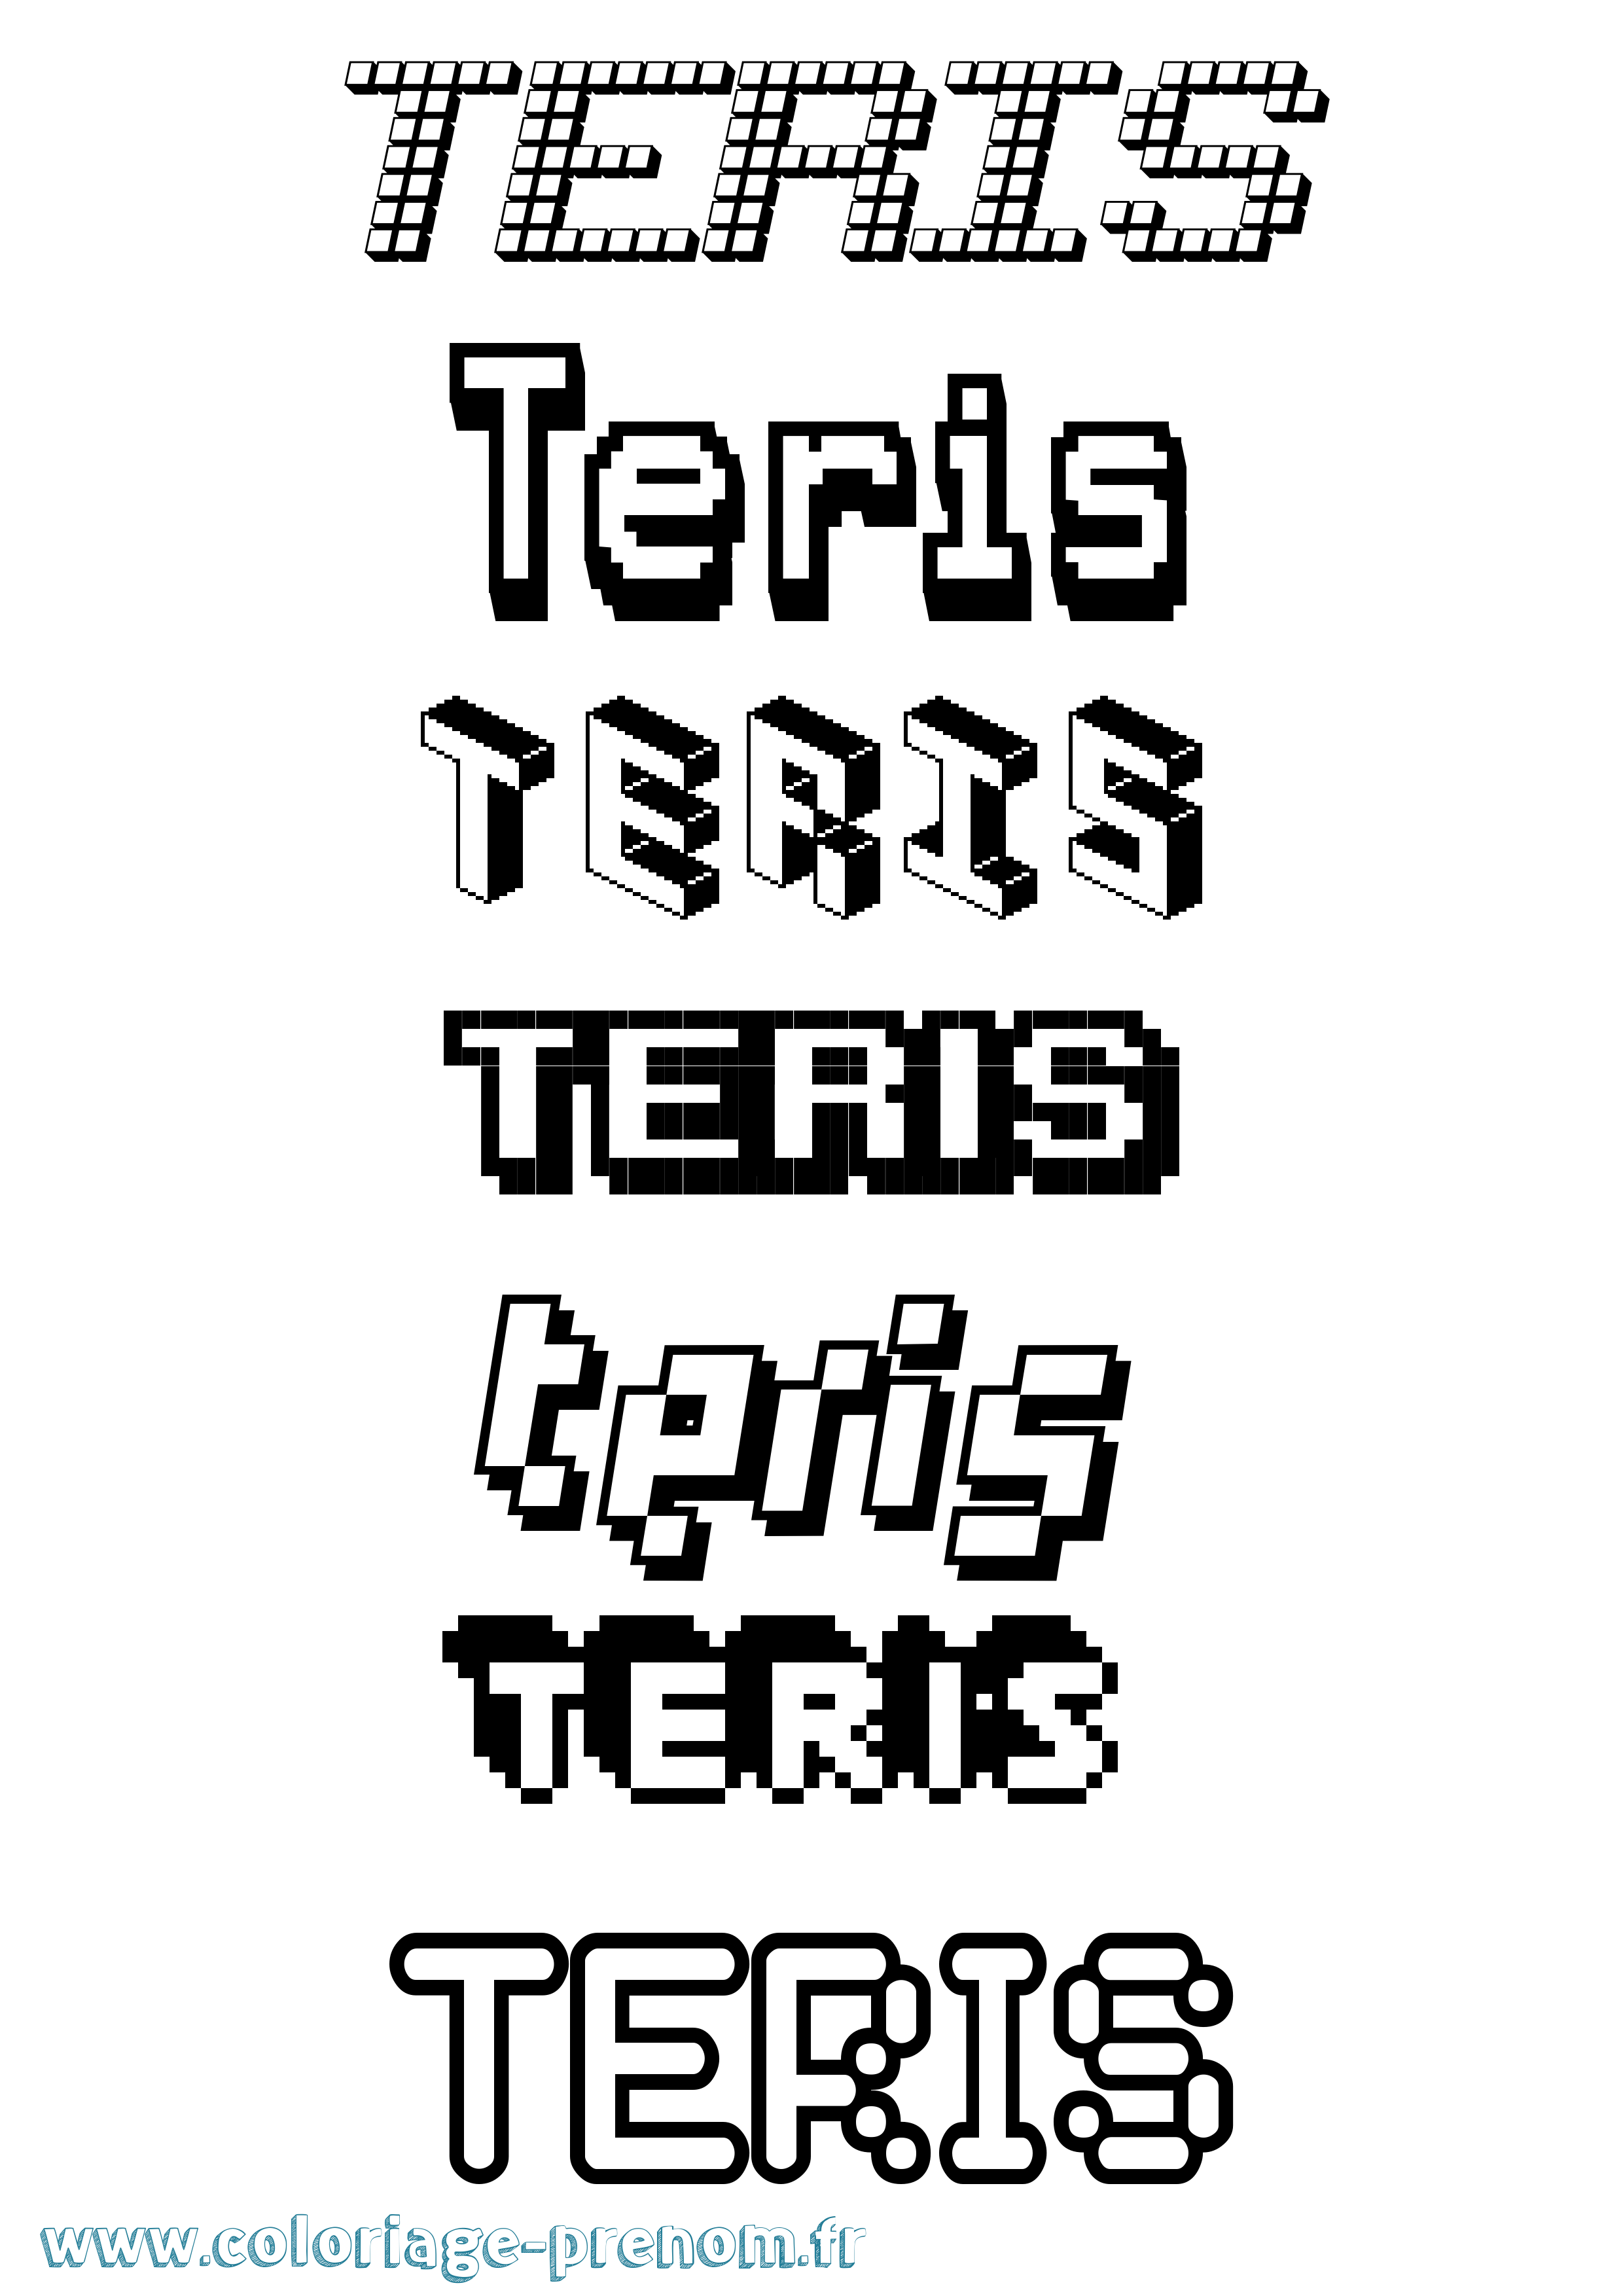 Coloriage prénom Teris Pixel